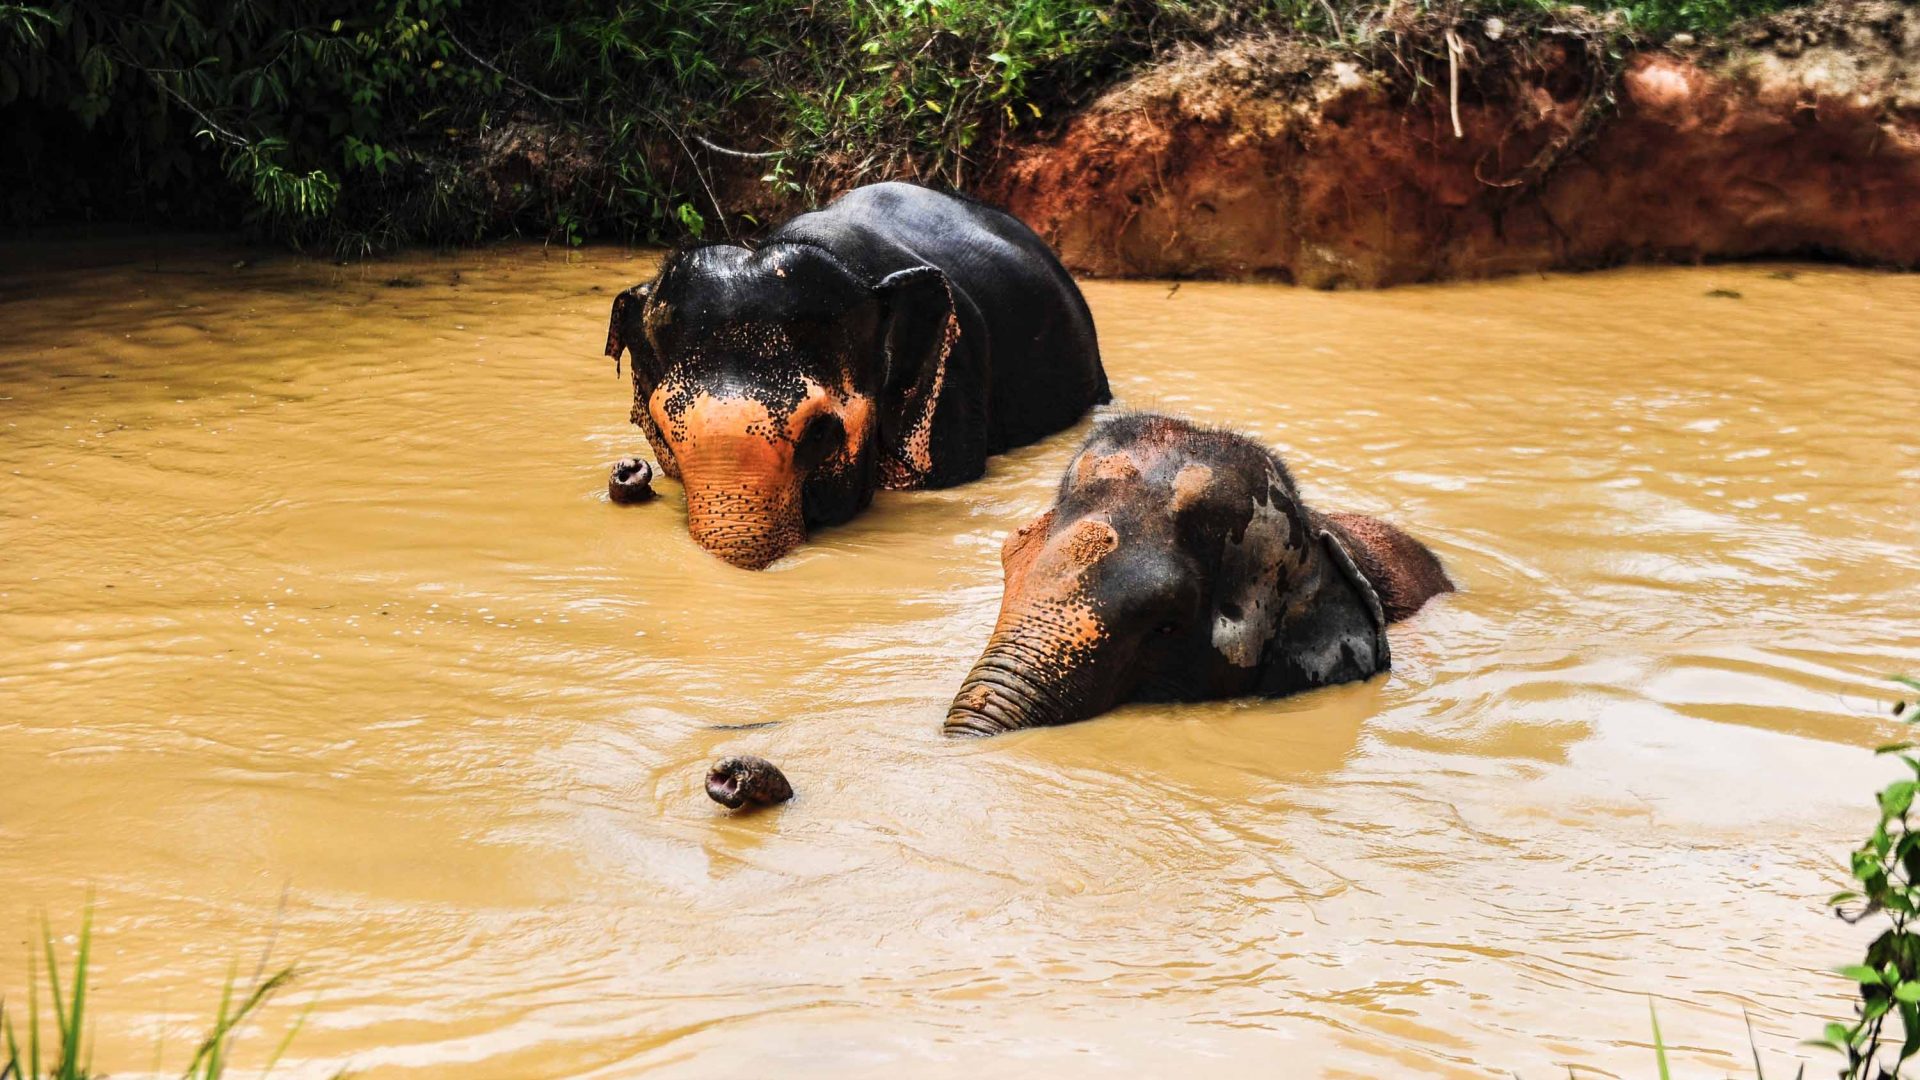 Two elephants bathing in brown water.